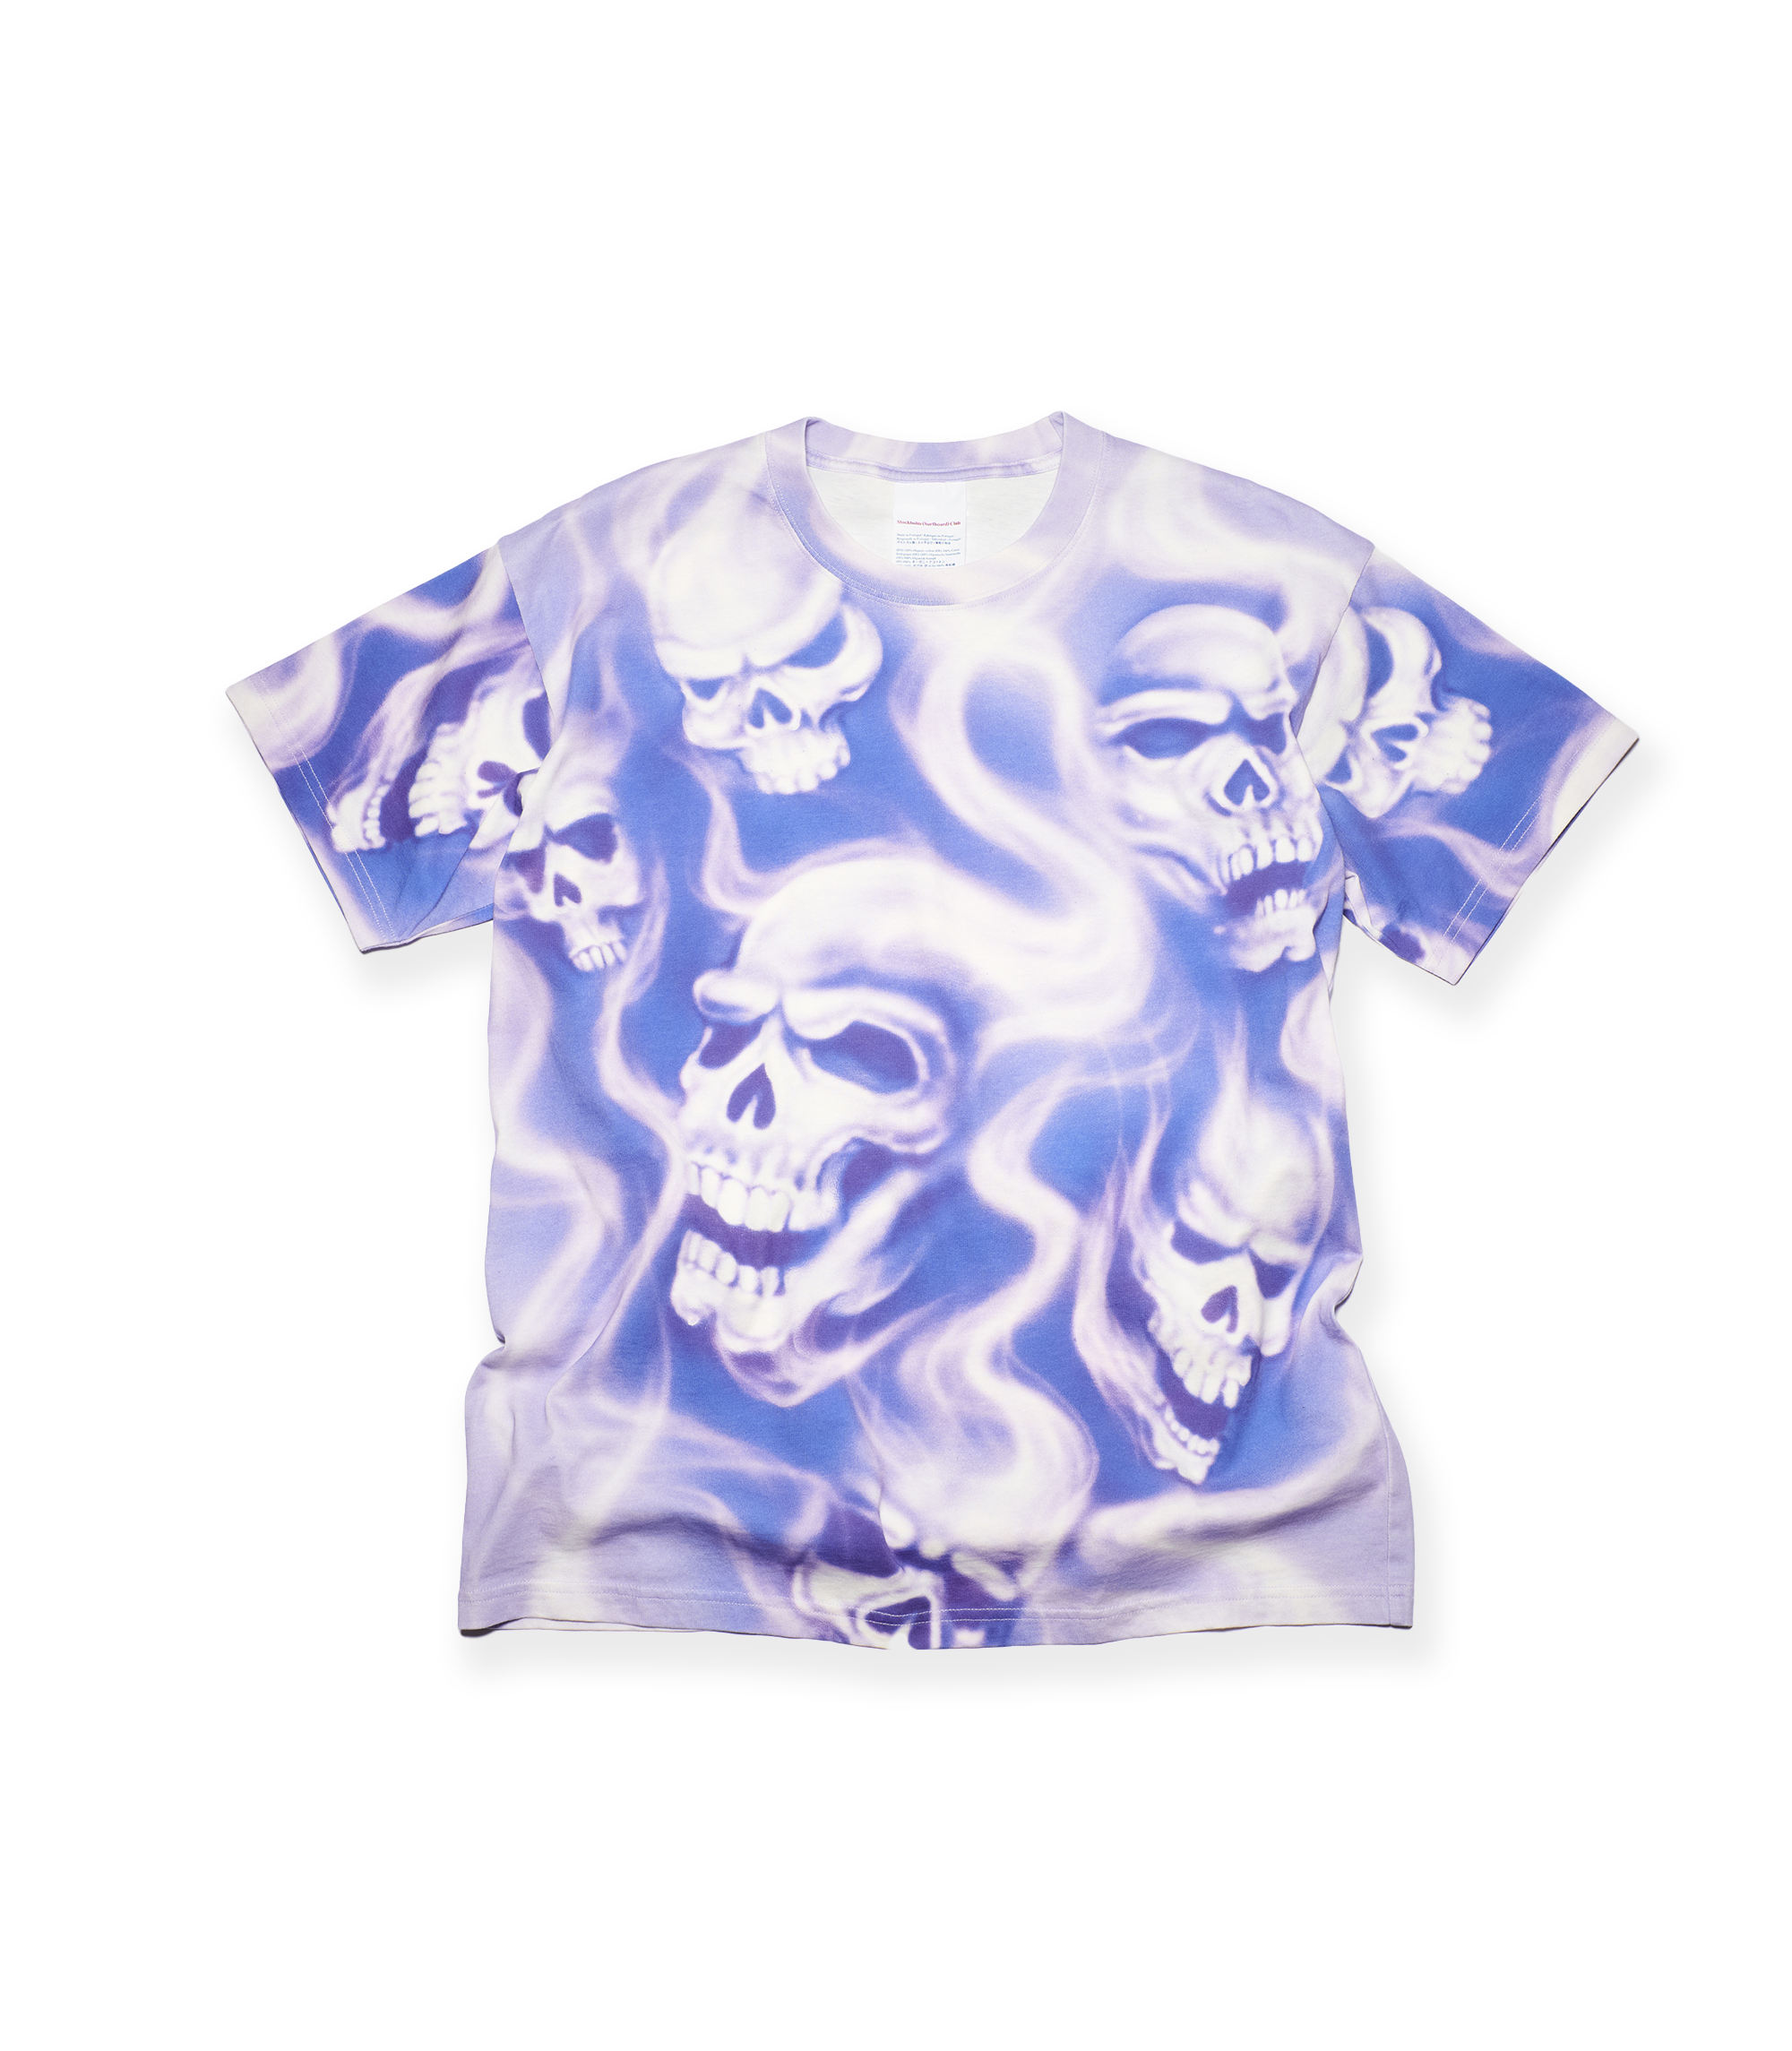 Alko Airbrush T-Shirt - Blue Skull